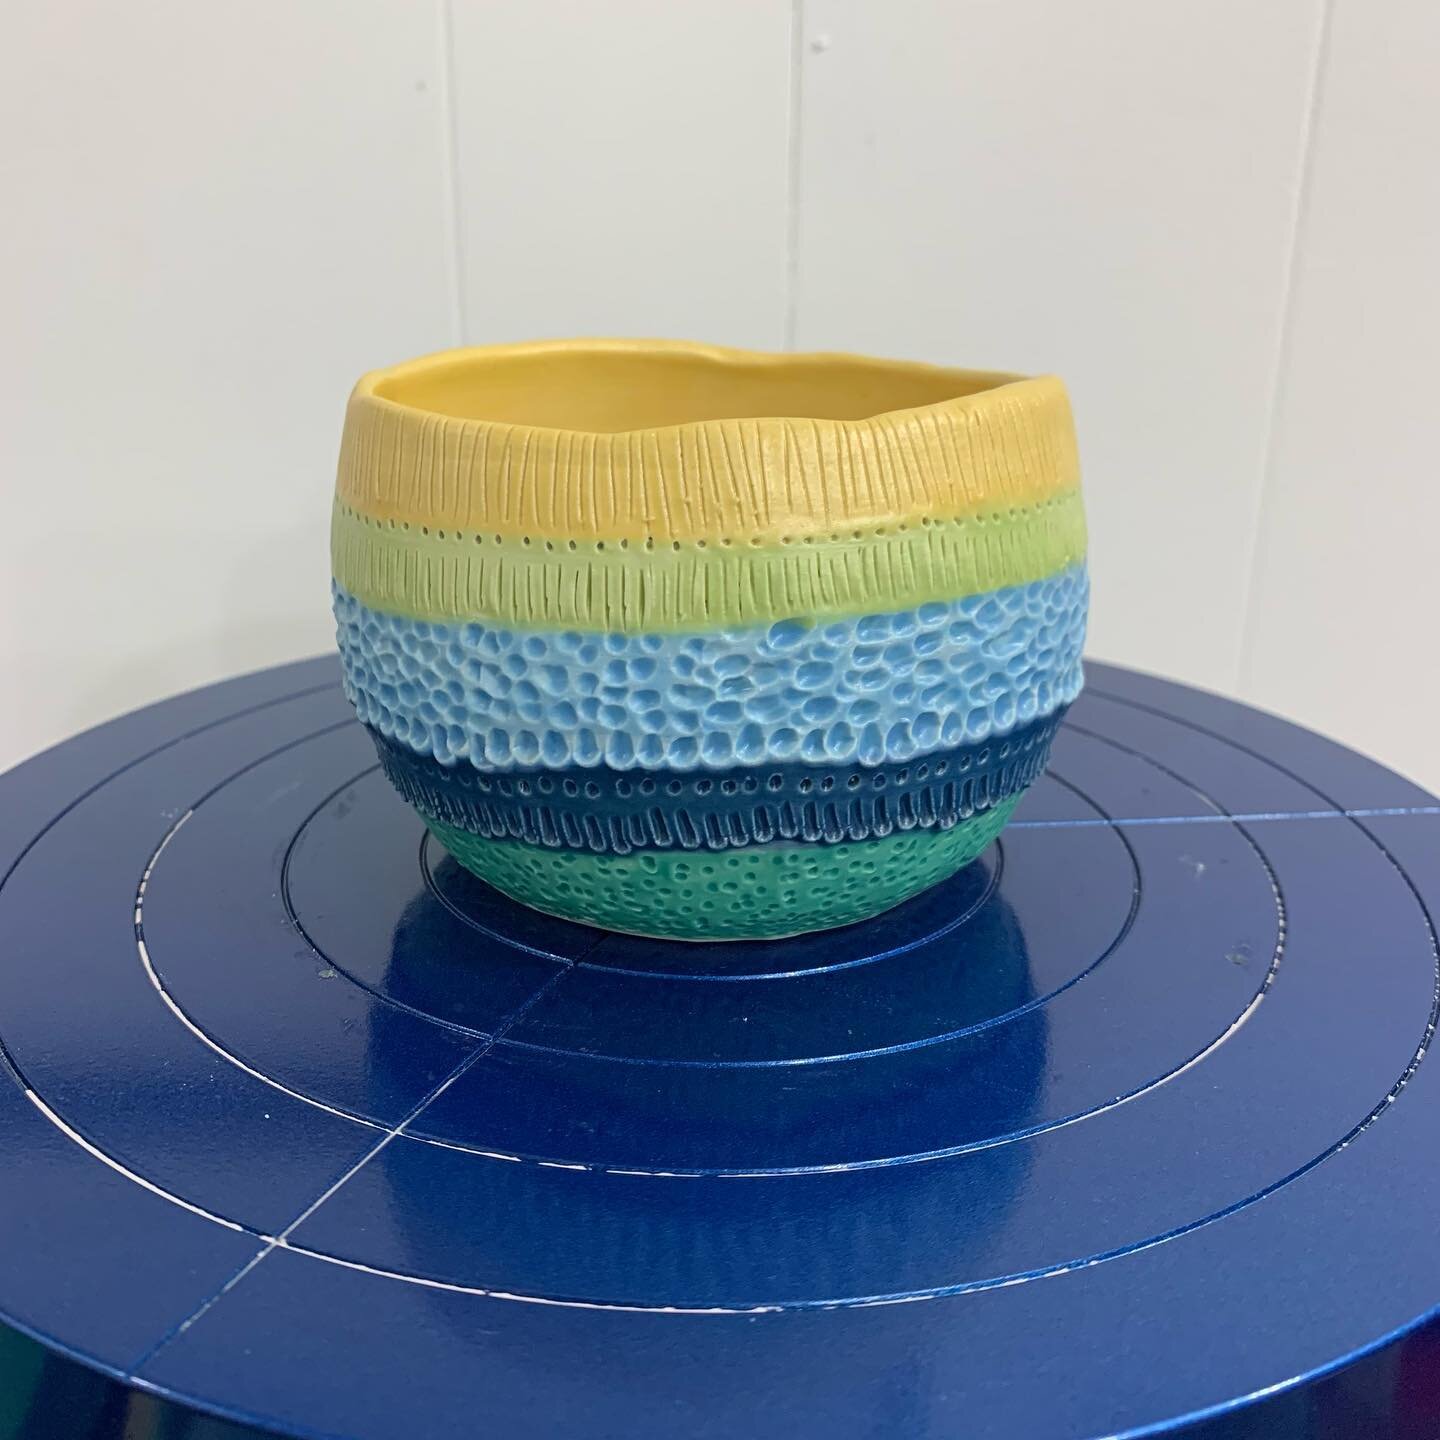 3 happy little pots.

#texture #kitchen #kitchendesign #interiordesign #wheelthrown #pinchpot #wheelthrownpottery #wheelthrownceramics #porcelain #pottery #ceramics #colorful #ceramicist #ceramicsofinstagram #clay #handmade #handmadeinct #connecticut